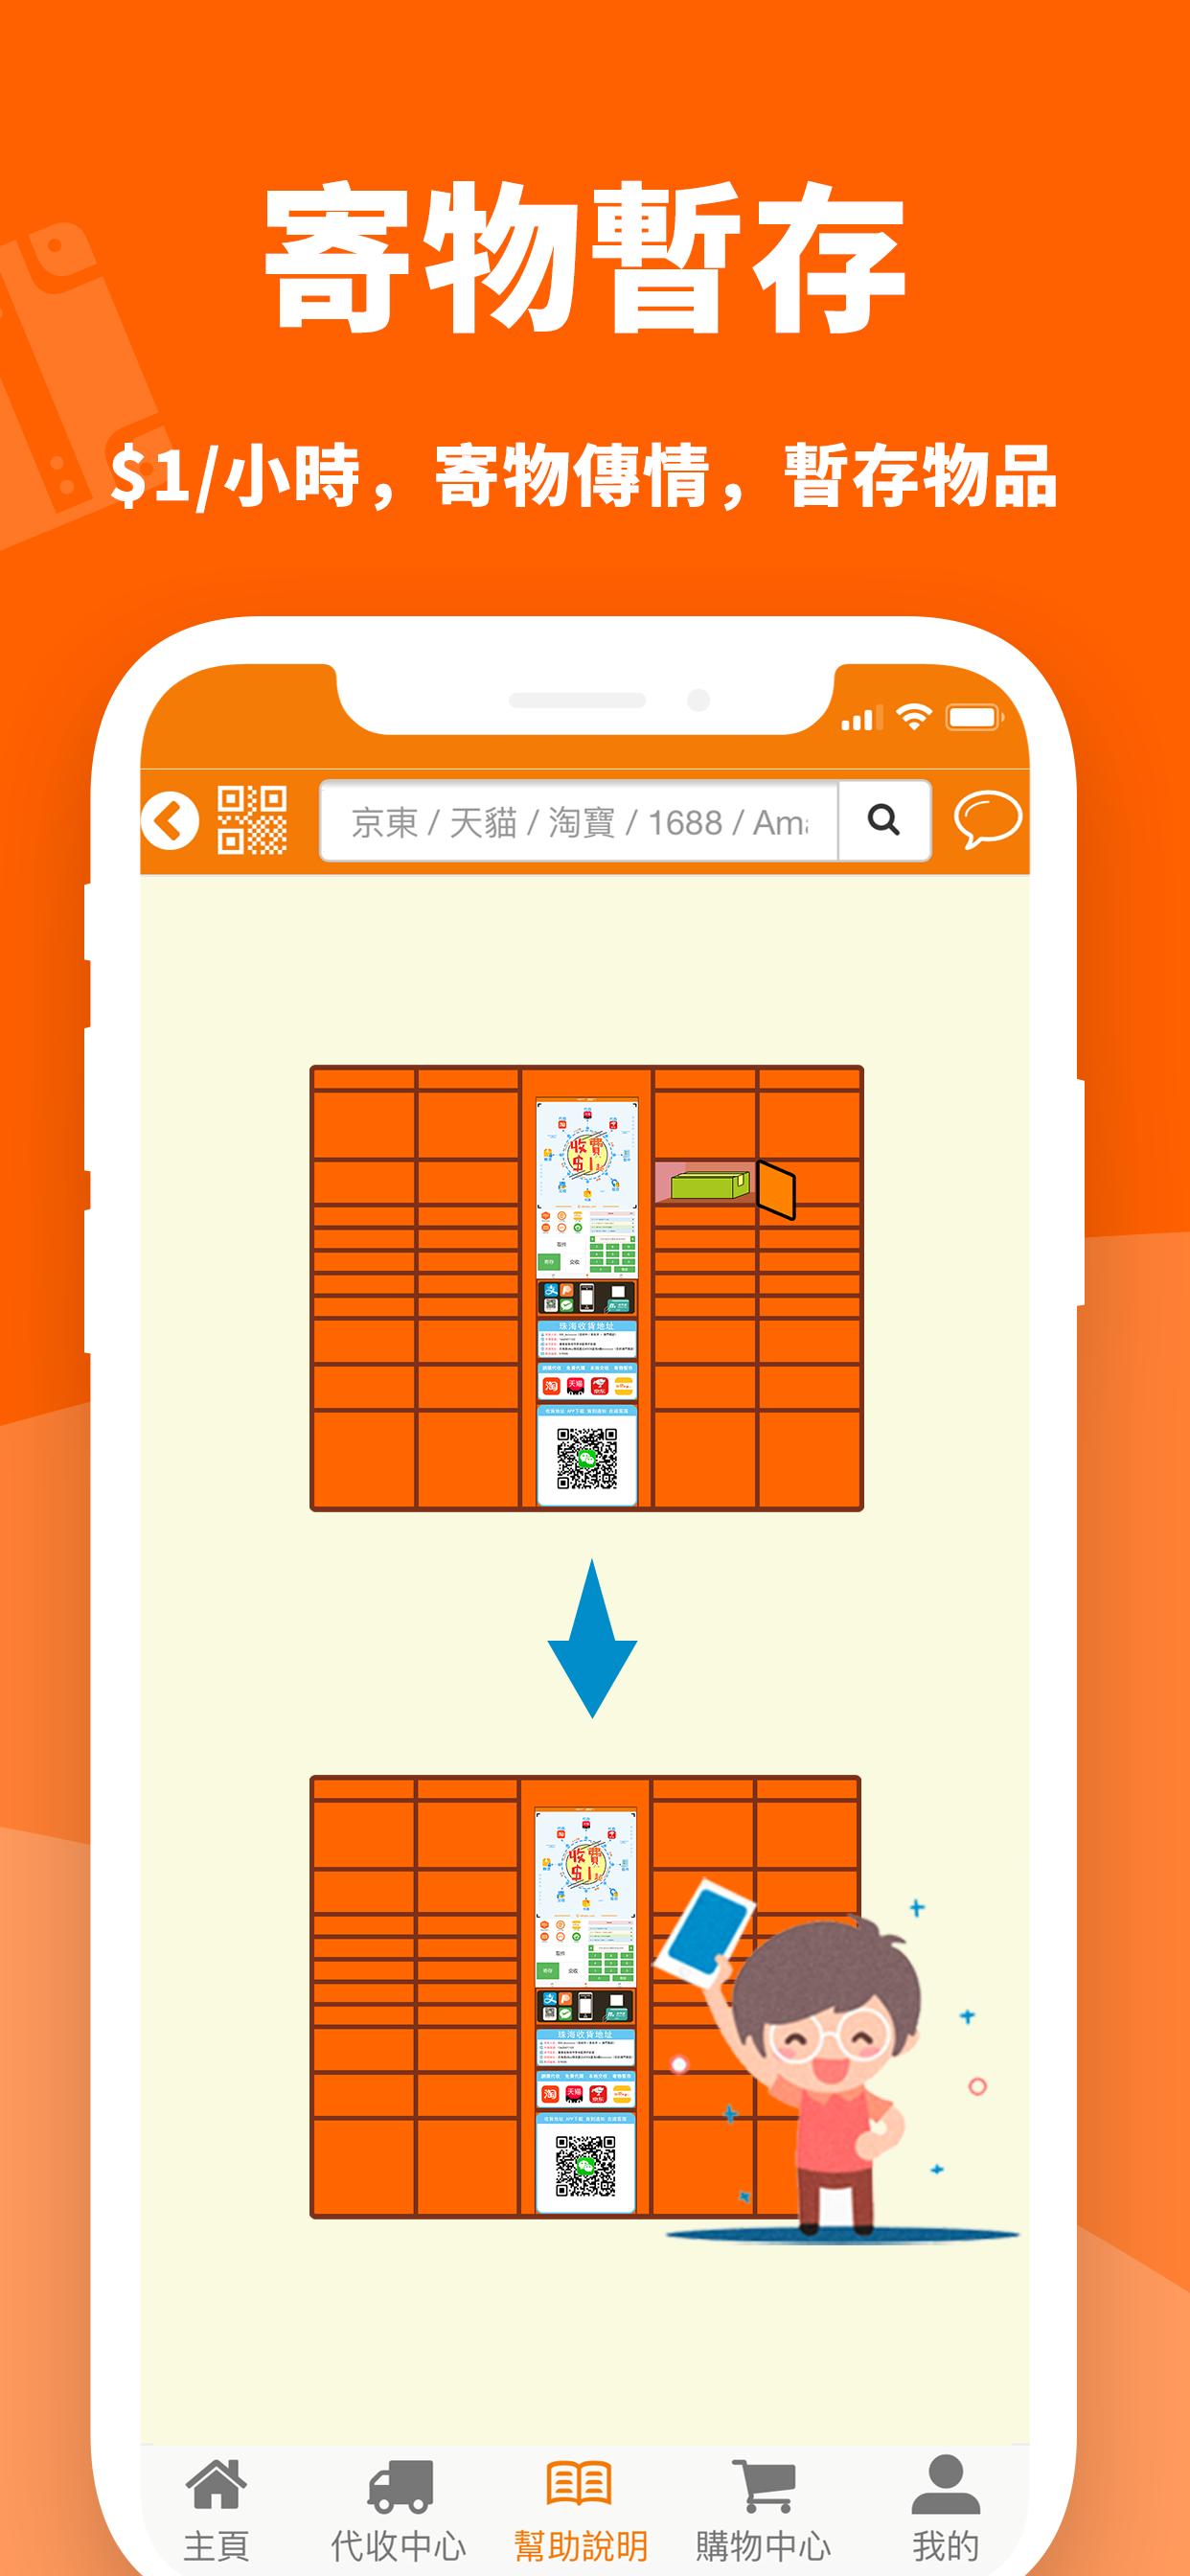 eBuy.mo 澳門易購網 2.1.4 Screenshot 7